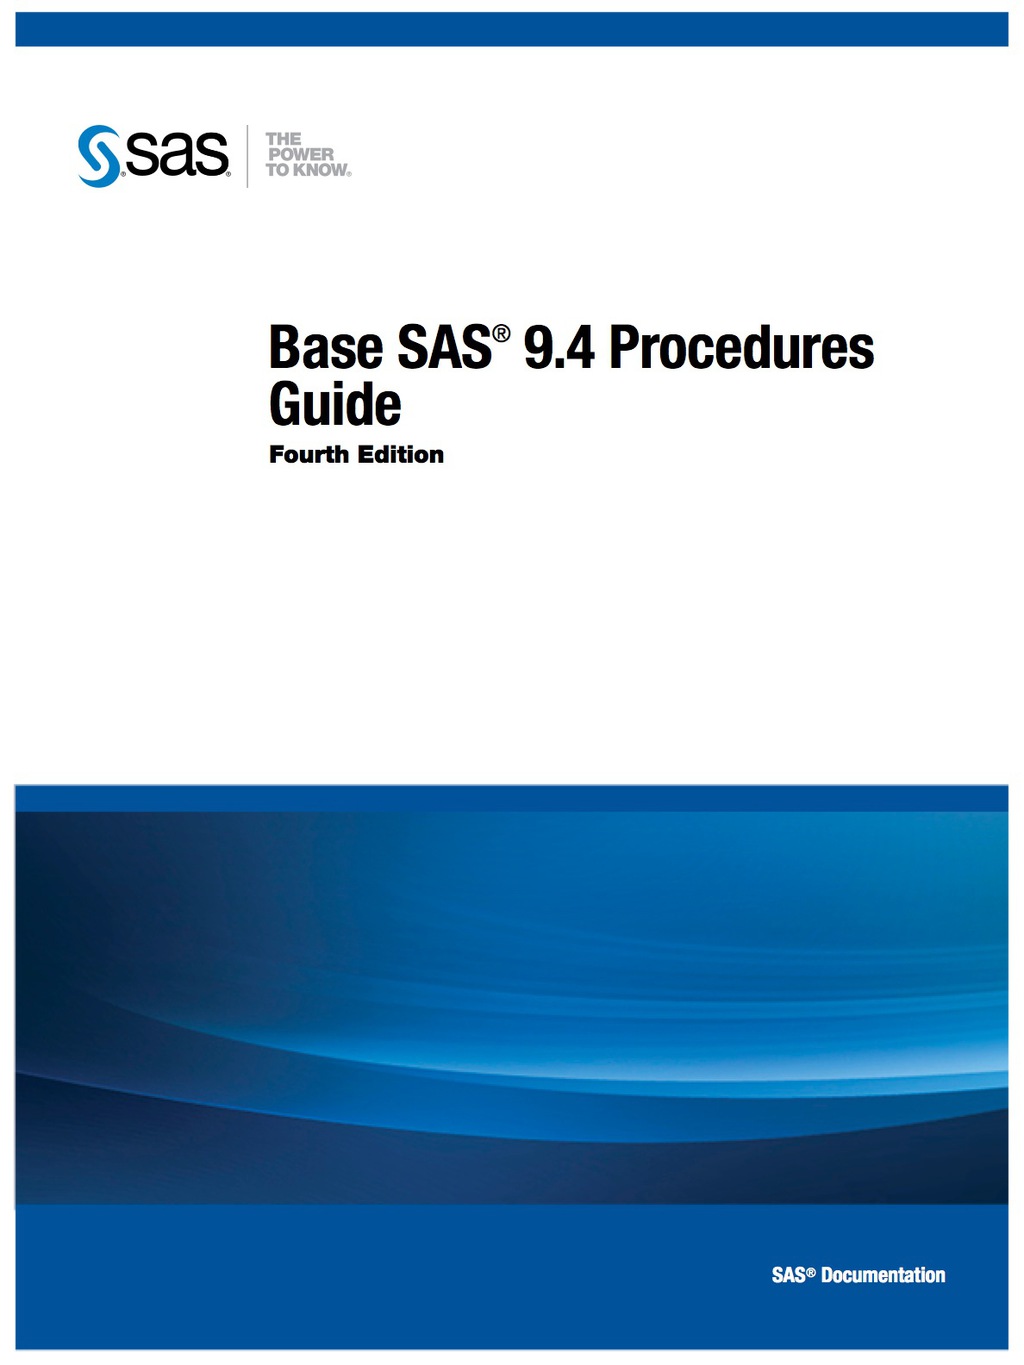 Base SAS 9.4 Procedures Guide - 4th Edition (eBook)